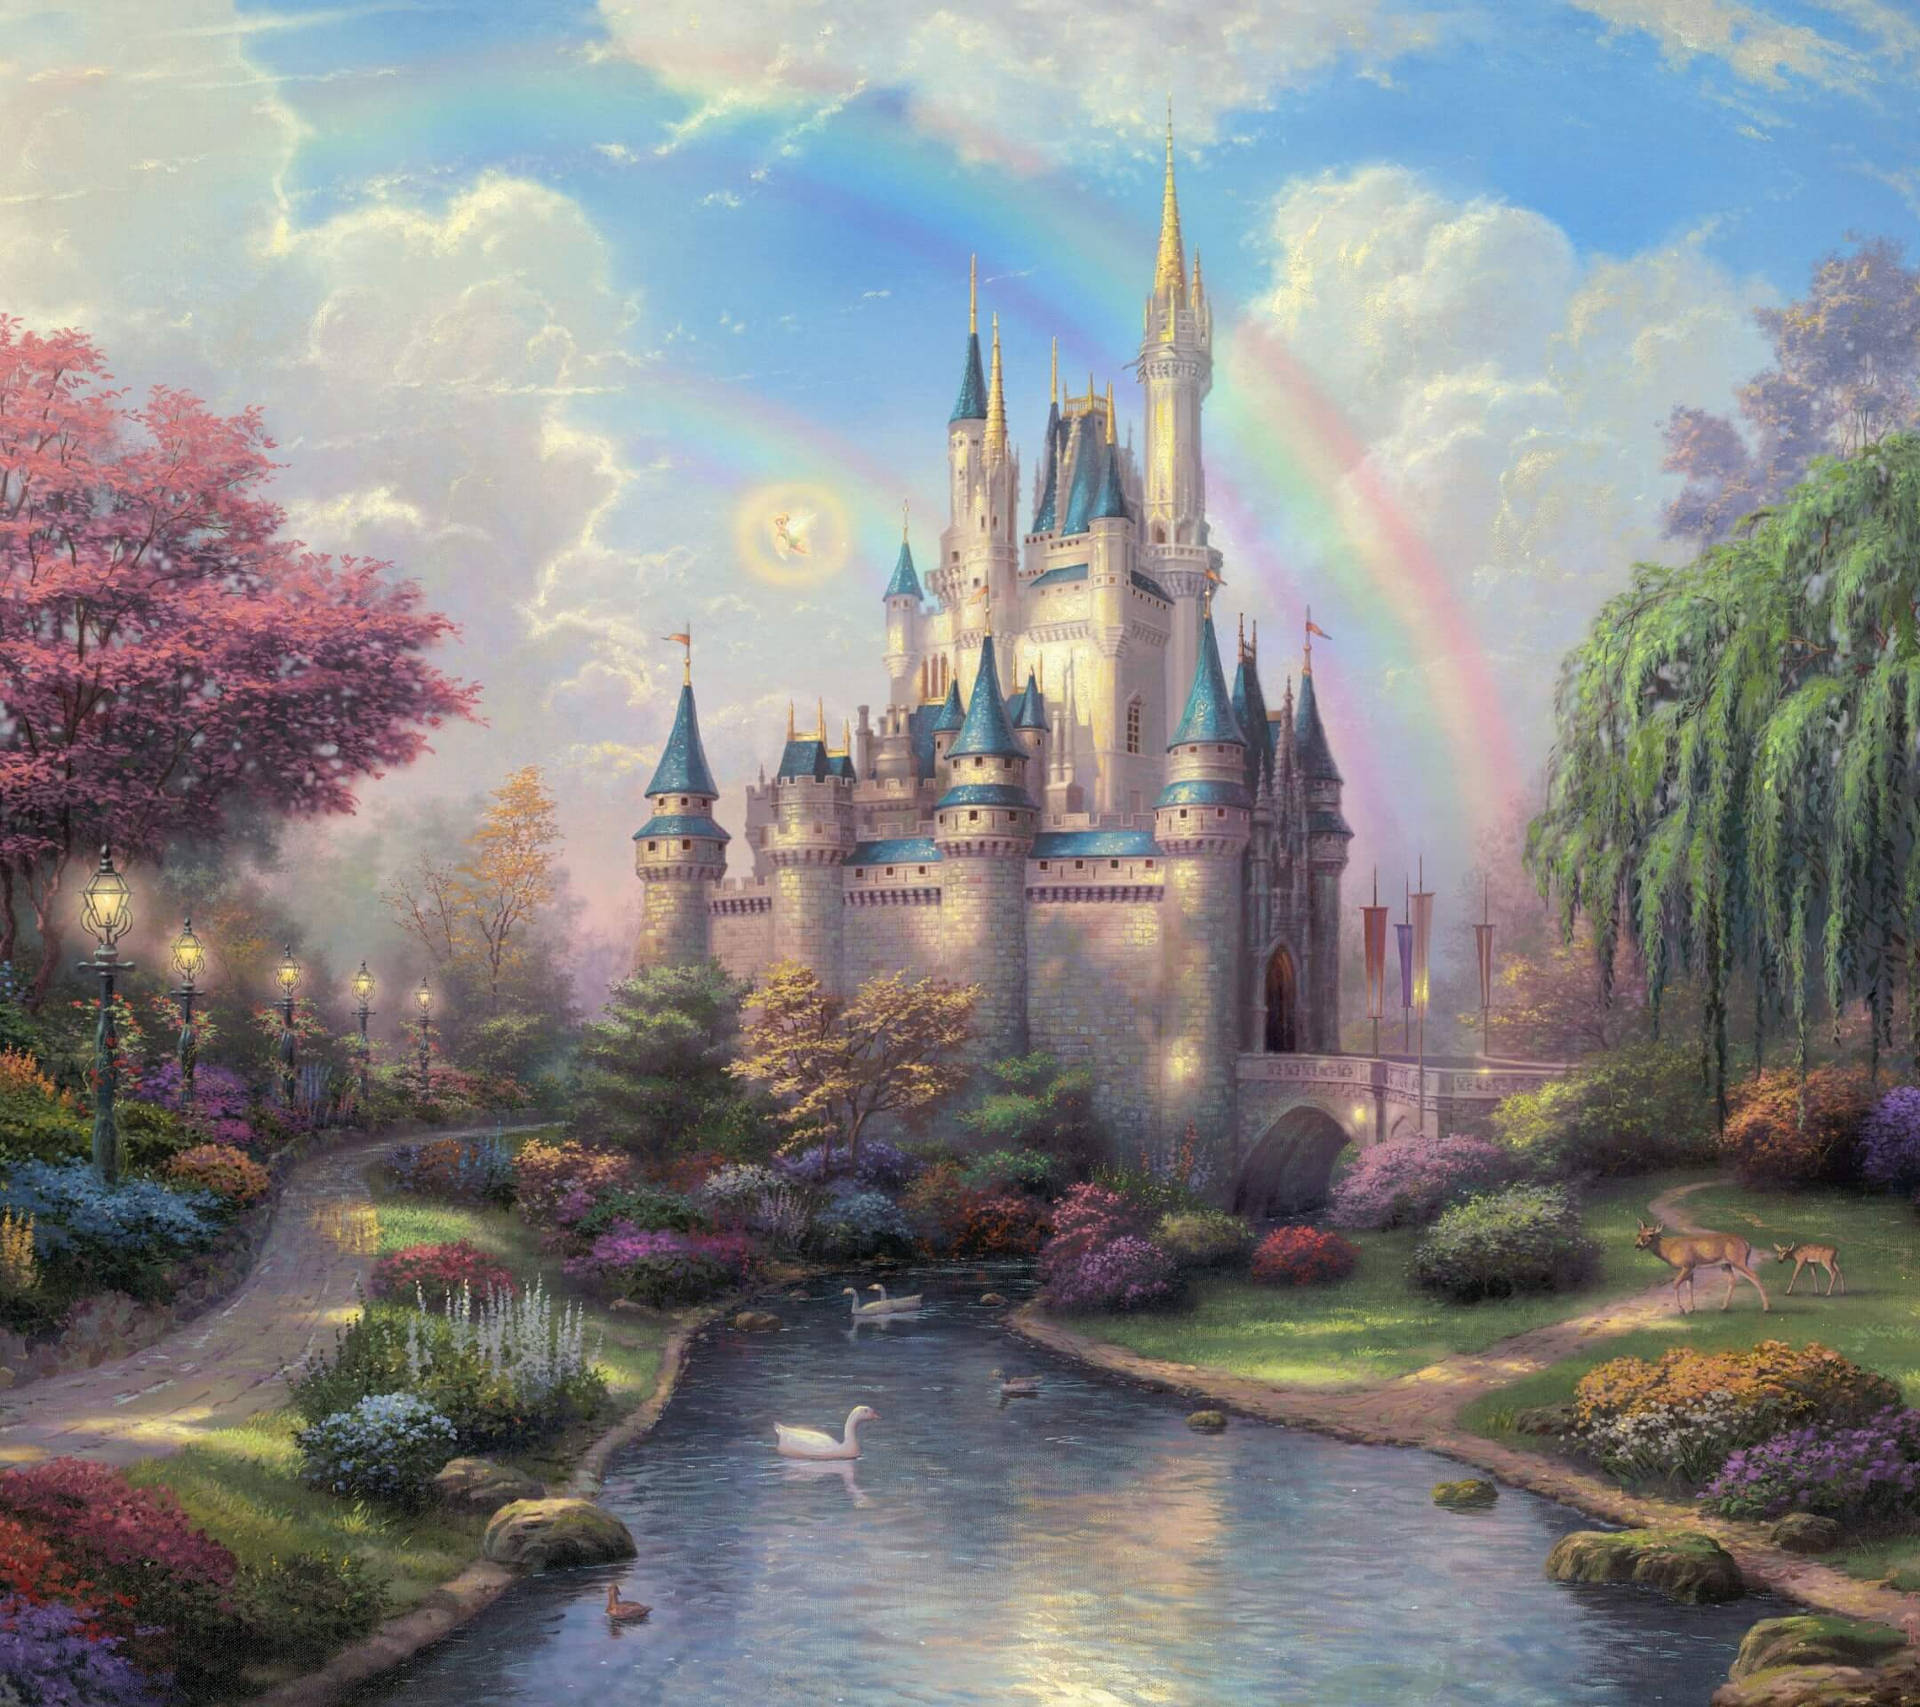 Magical castle art image wallpaper.